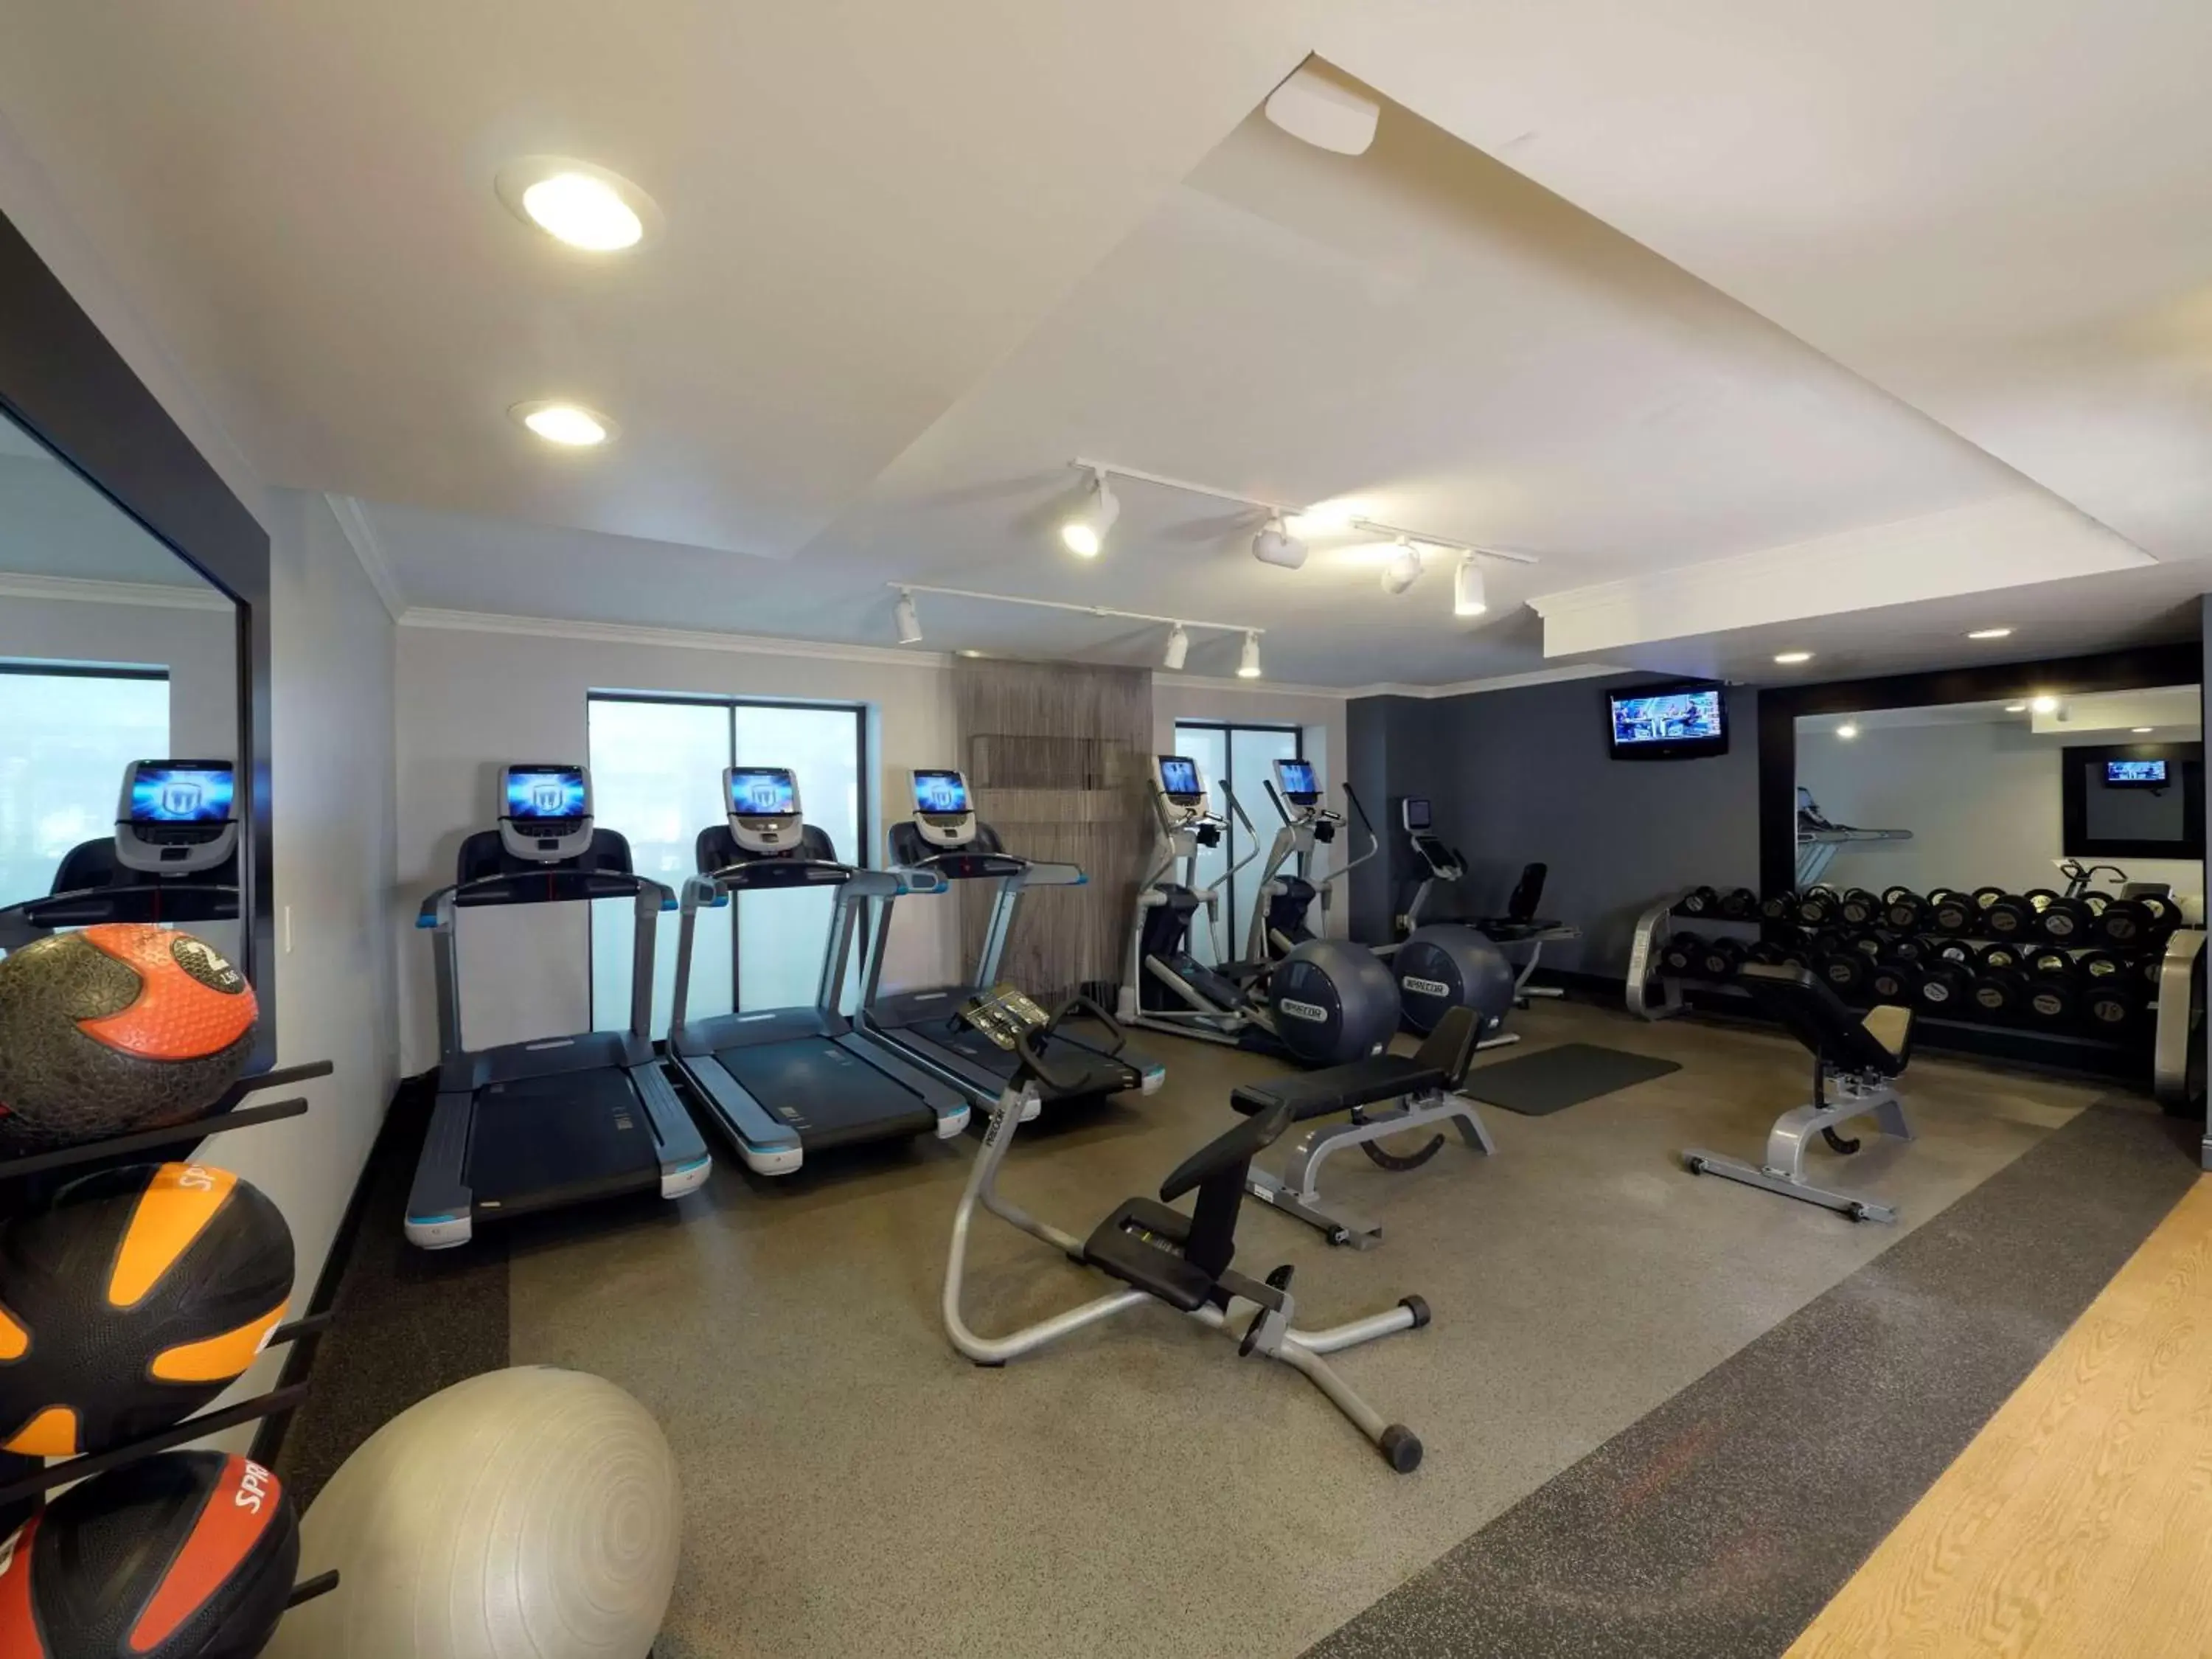 Fitness centre/facilities, Fitness Center/Facilities in Hilton Garden Inn Mexico City Santa Fe